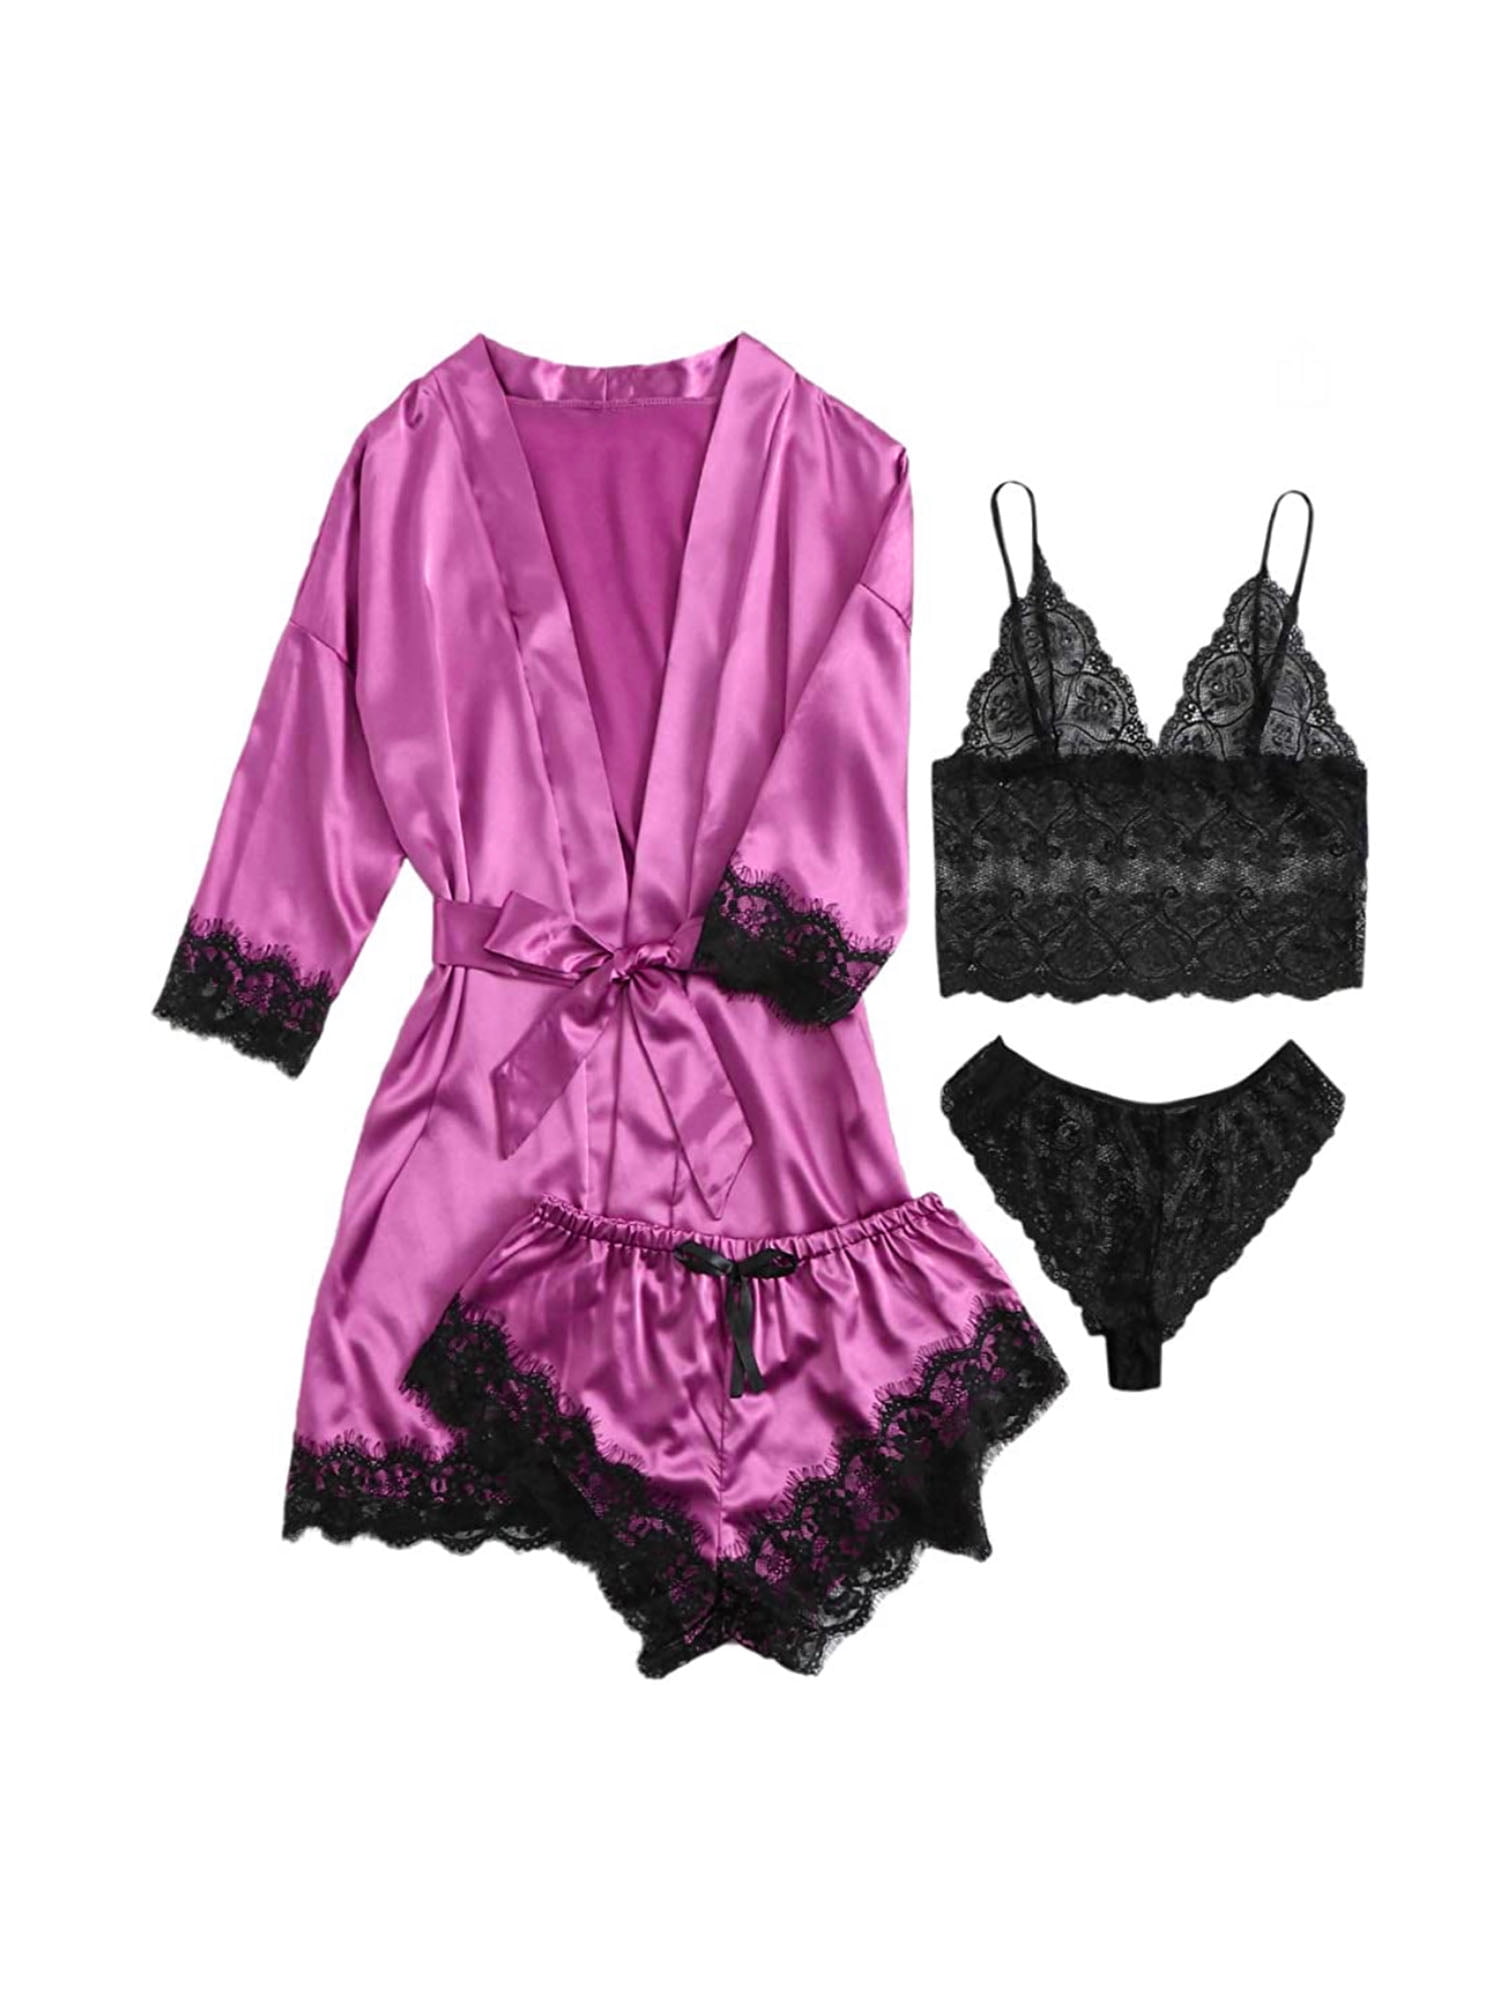 LSFYSZD Women Sexy-Lingerie Sleepwear, Satin Silk Babydoll Lace Nightwear,  Sexy Pajamas Set